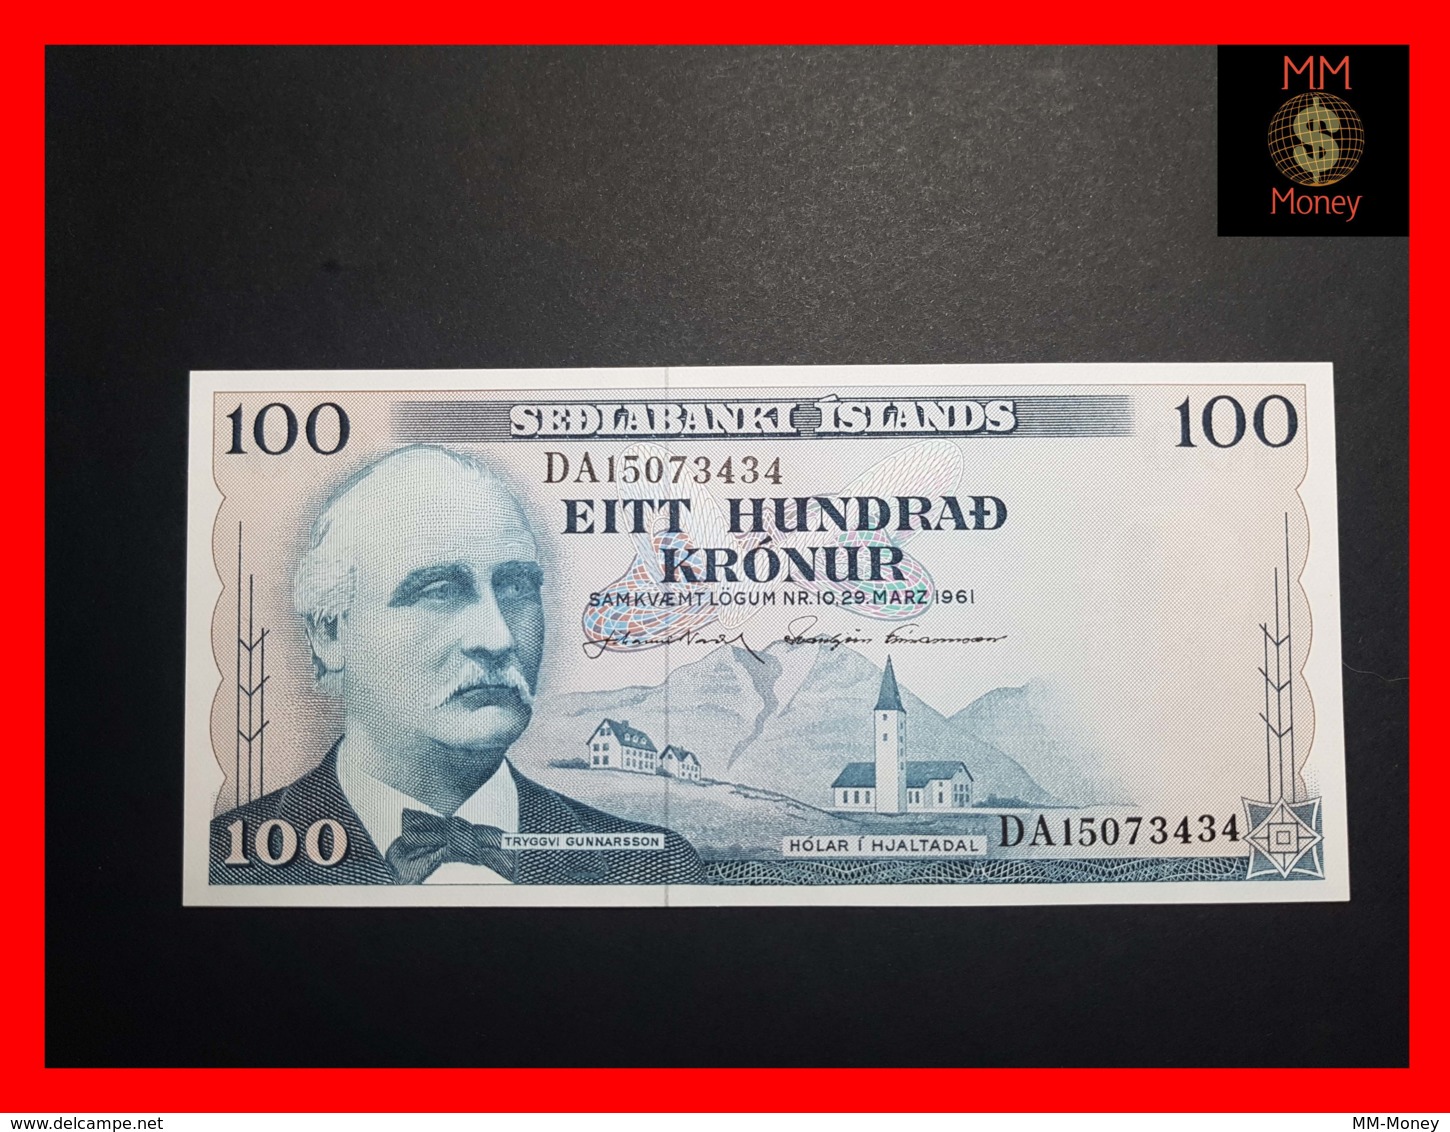 ICELAND 100 Kronur  L. 29.03.1961  P. 44  Issued 1965  UNC  [MM-Money] - Iceland